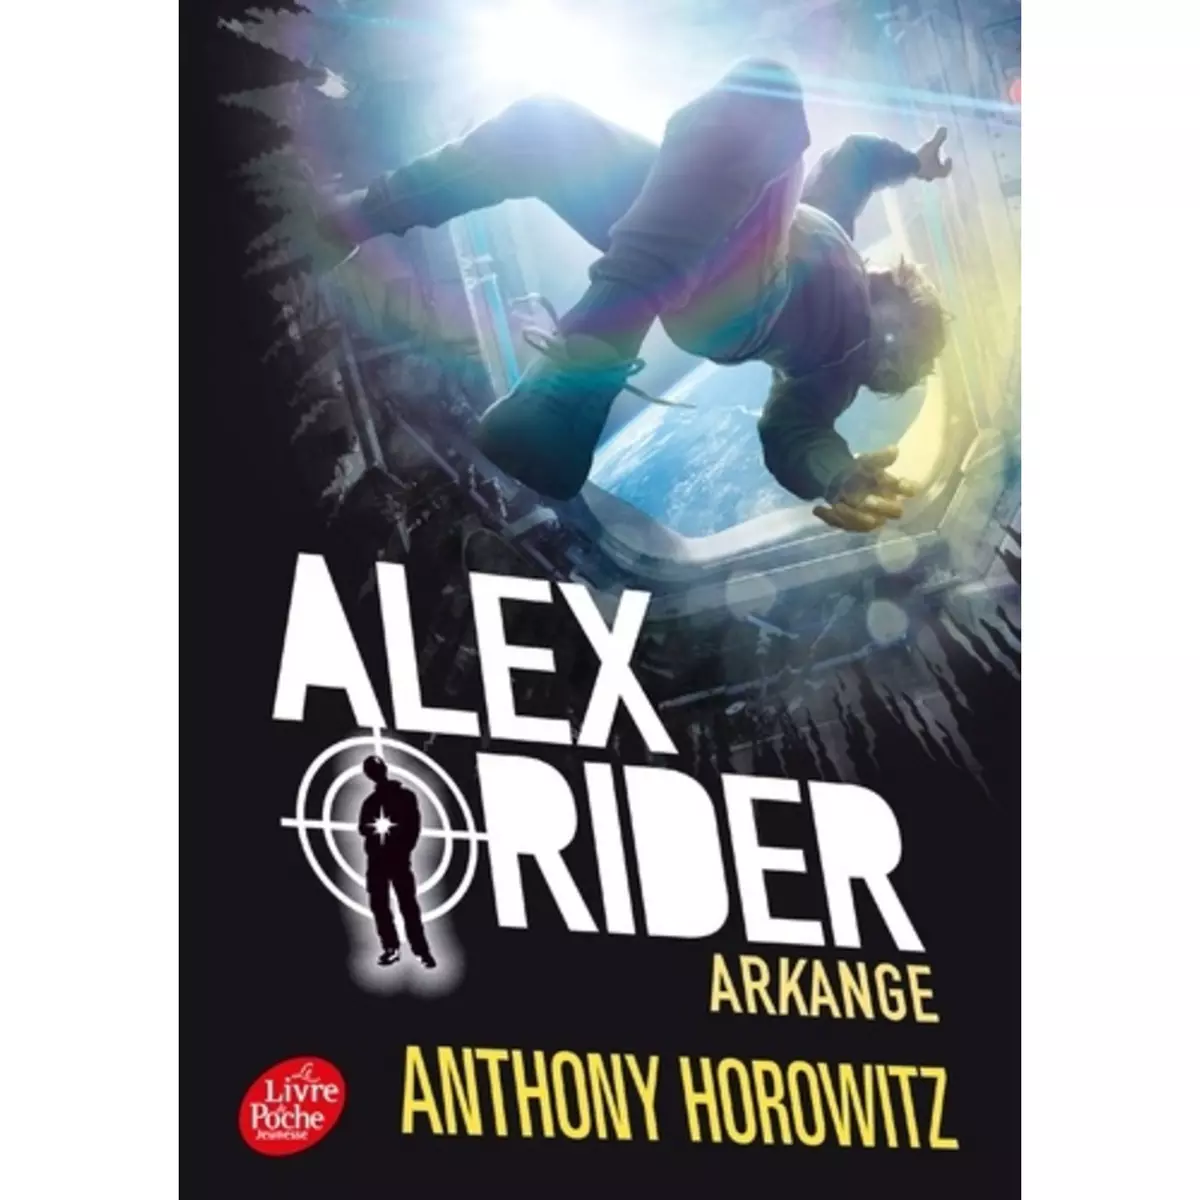  ALEX RIDER TOME 6 : ARKANGE, Horowitz Anthony